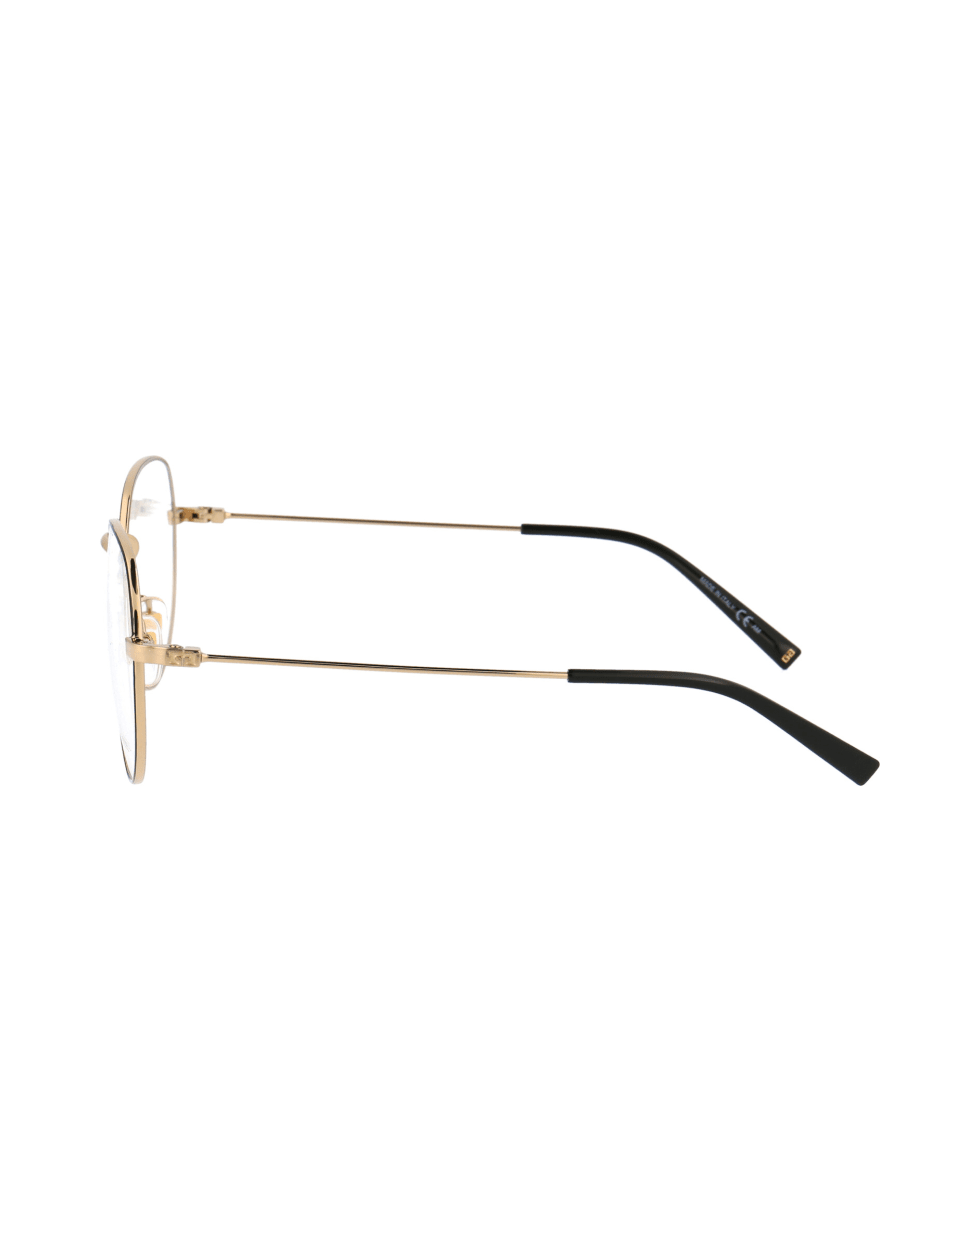 Givenchy Eyewear Gv 0138 Glasses - 2M2 BLK GOLD B